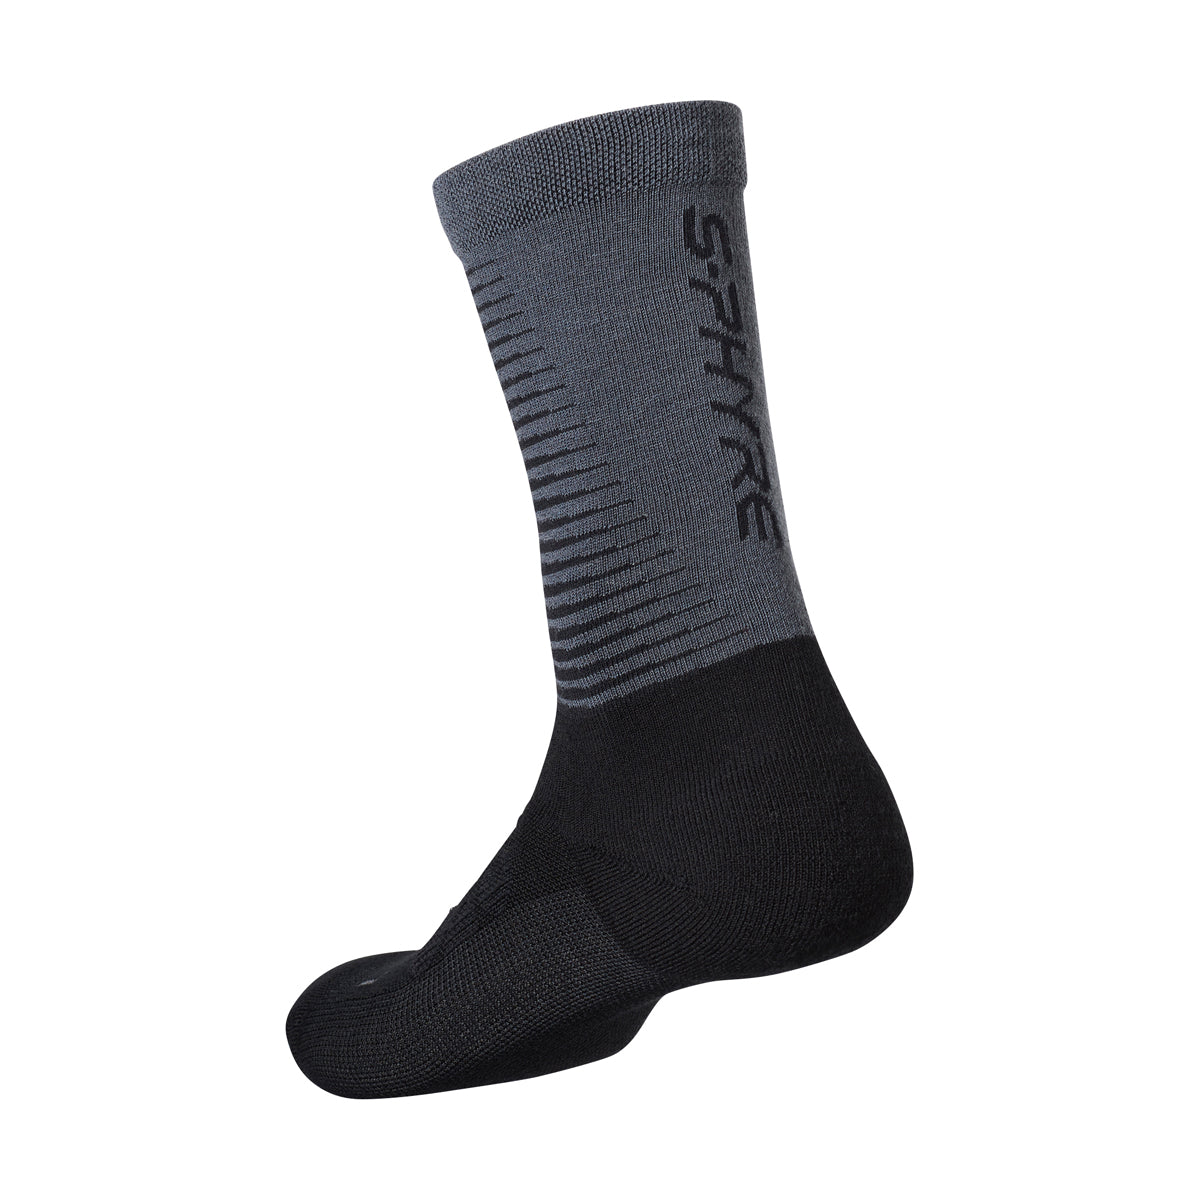 S-PHYRE MERINOWOLL Long socks